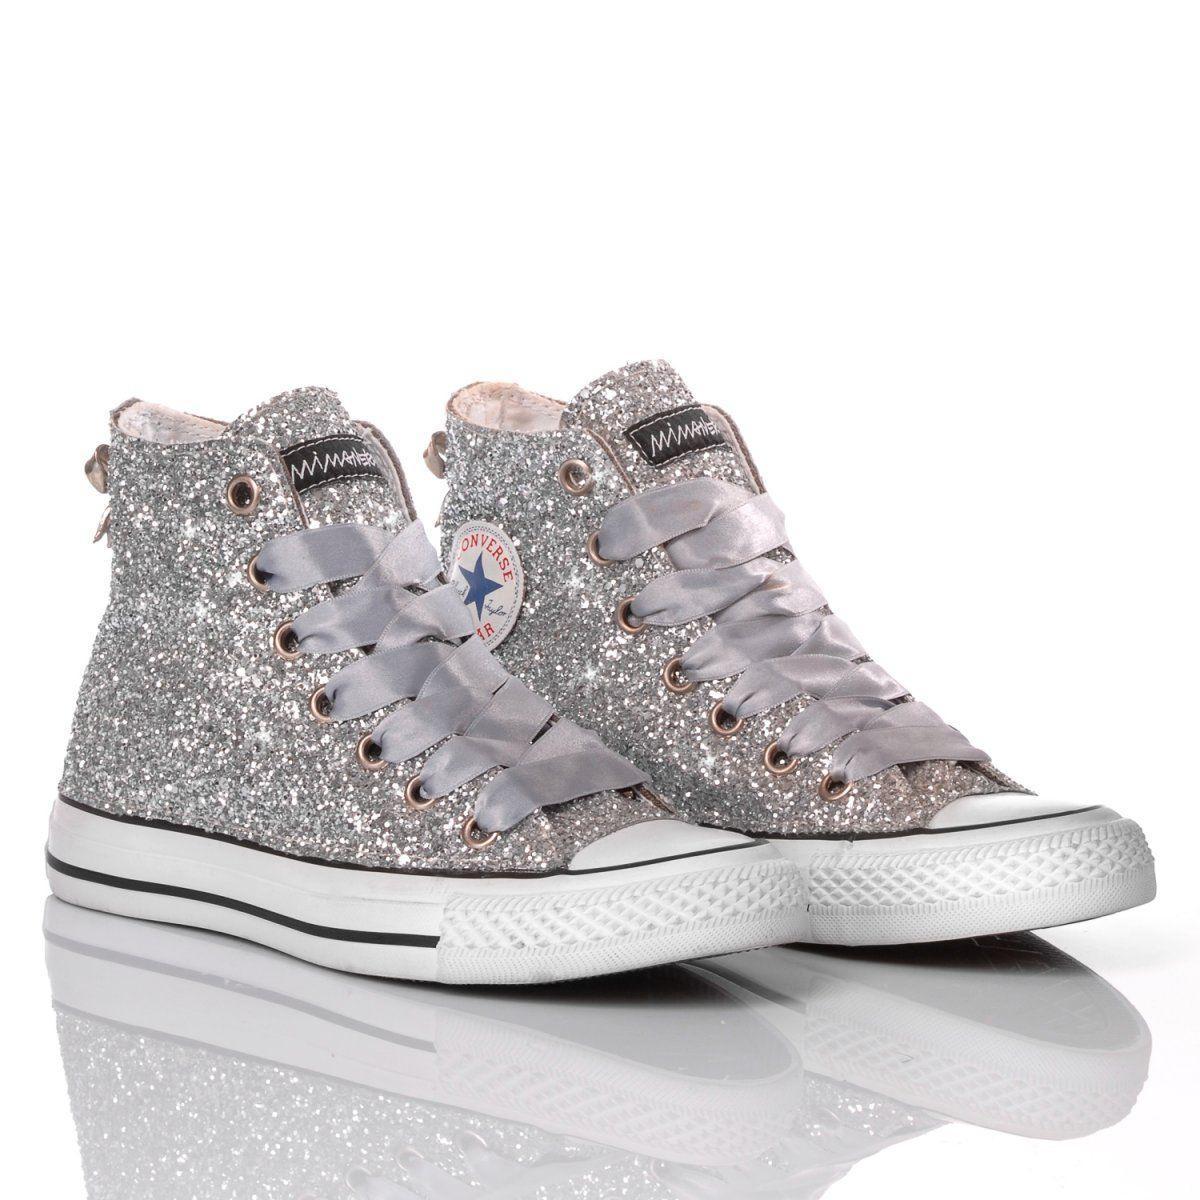 Converse Glitter Hi Top Sneakers in Silver (Metallic) - Save 28% | Lyst